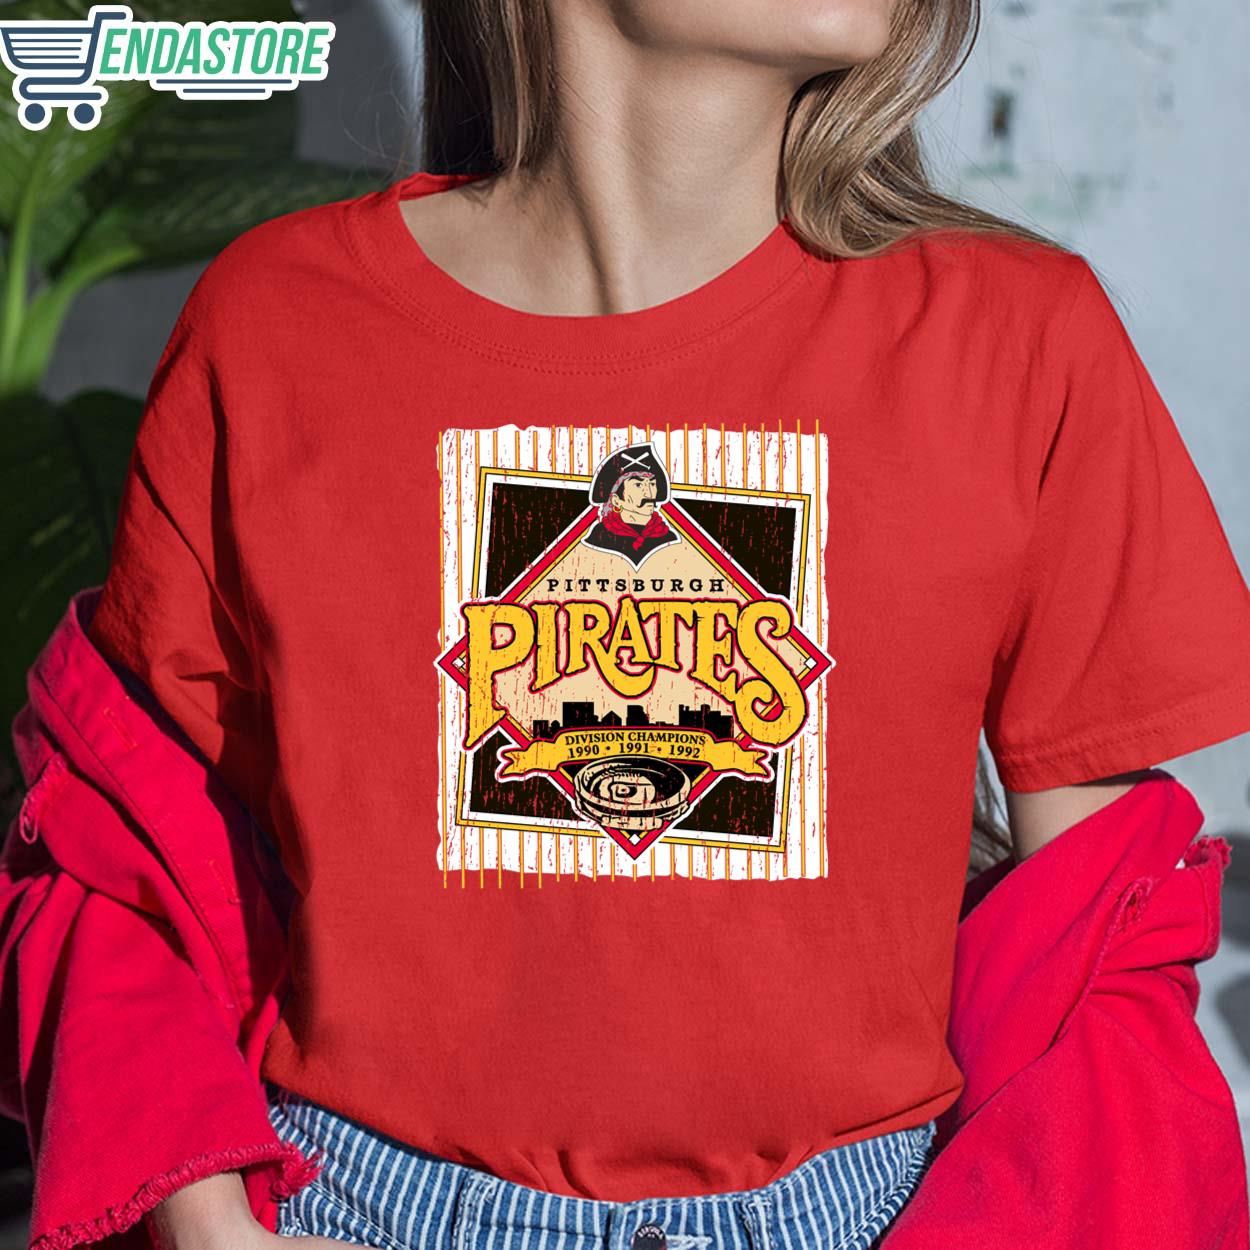 pittsburgh pirates t shirts vintage